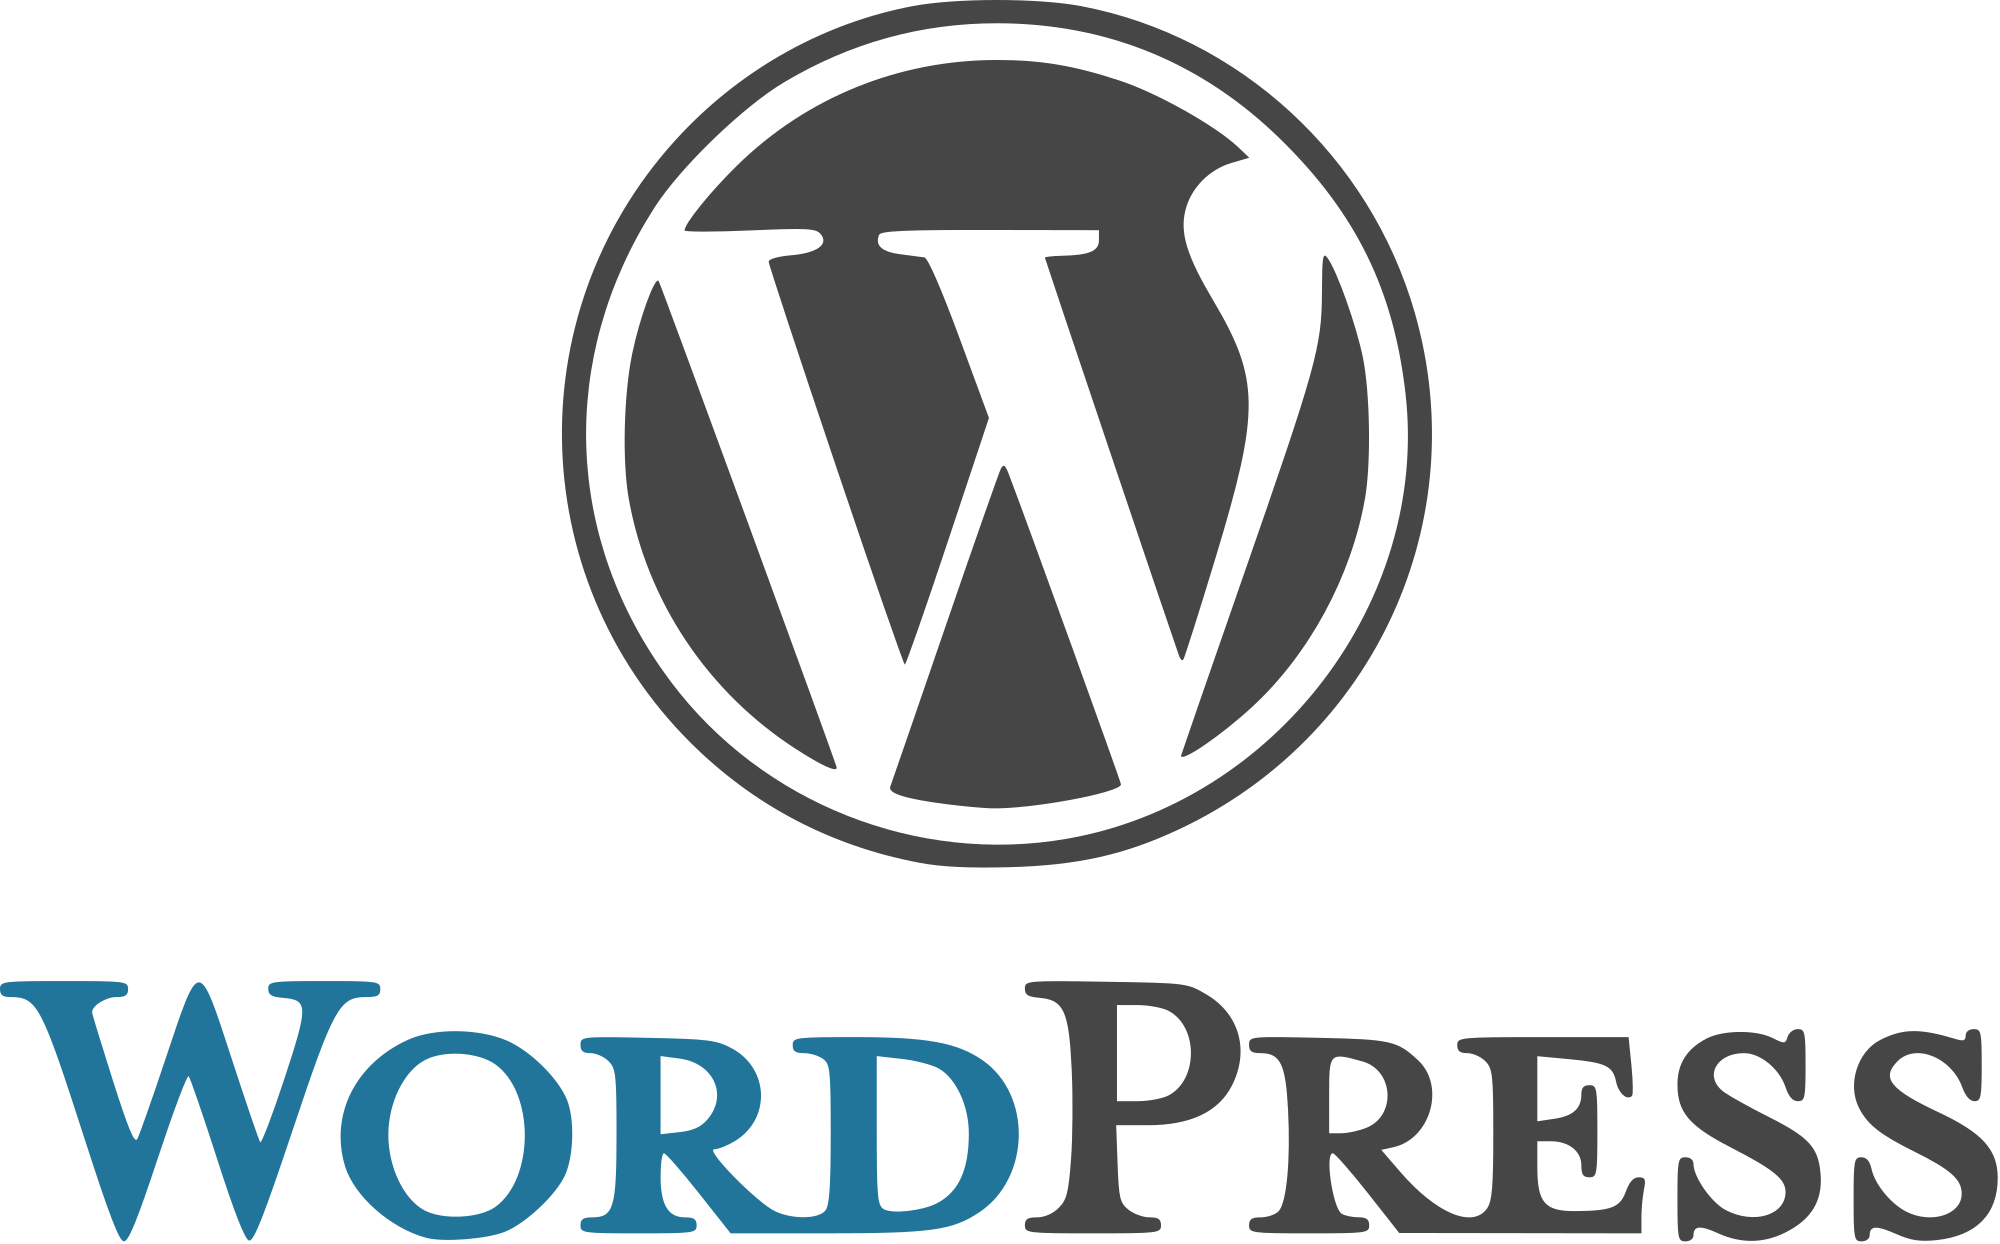 WordPress-development